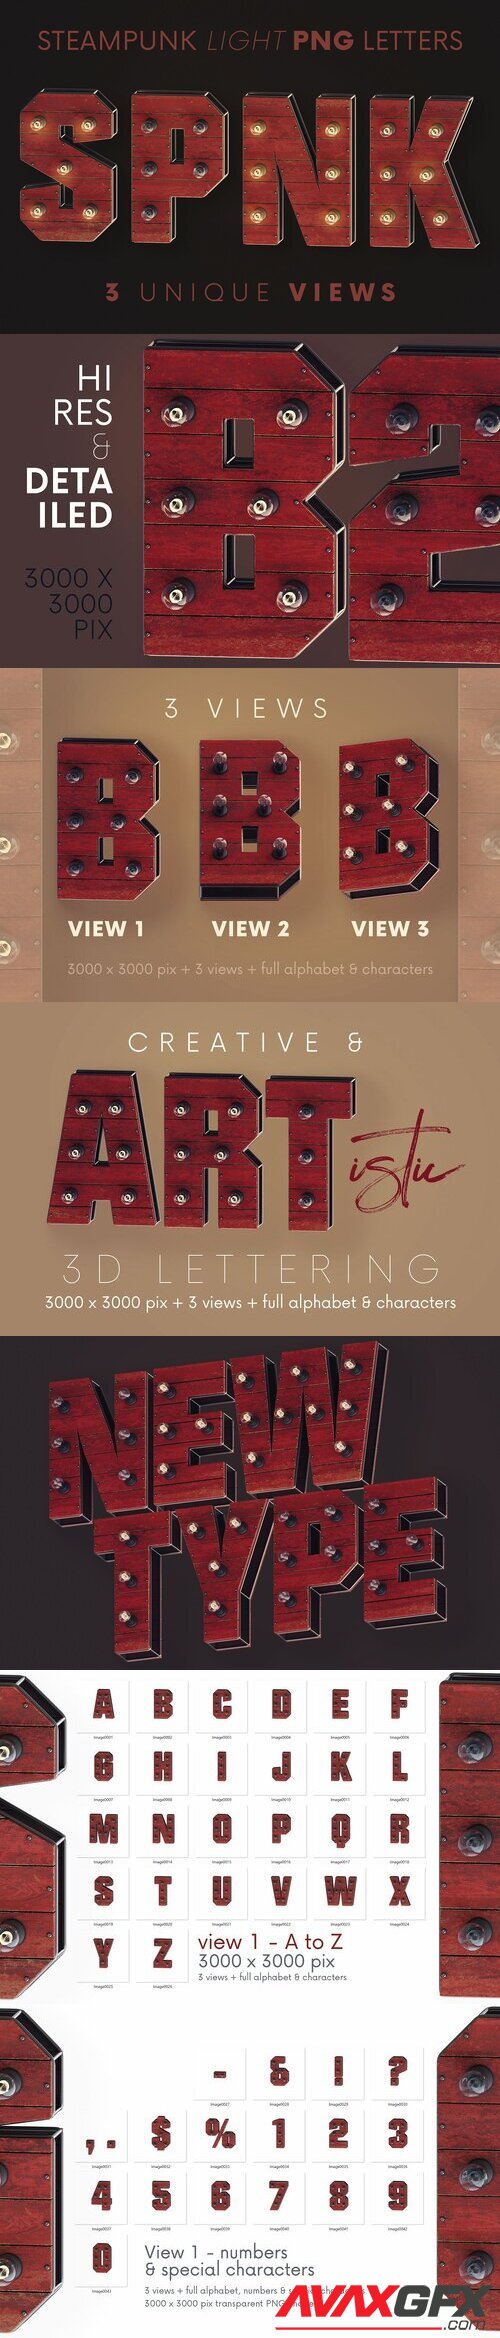 Creativemarket - Steampunk Light - 3D Lettering 6221185 